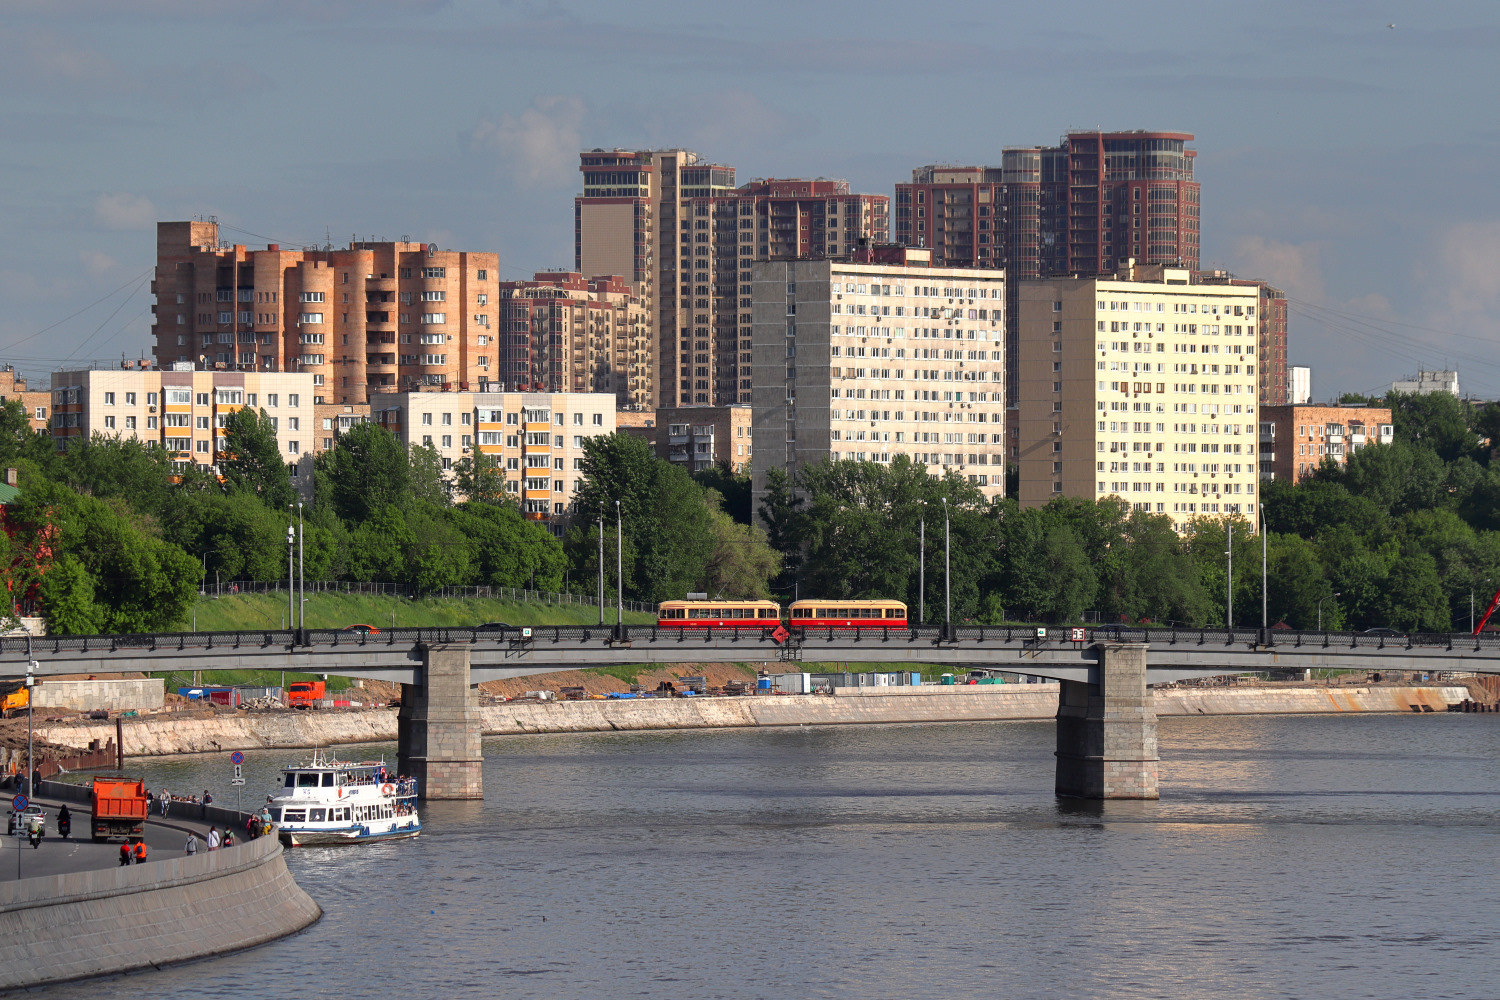 Moszkva — Retro transport parade on June 4, 2022; Moszkva — Trам lines: Central Administrative District